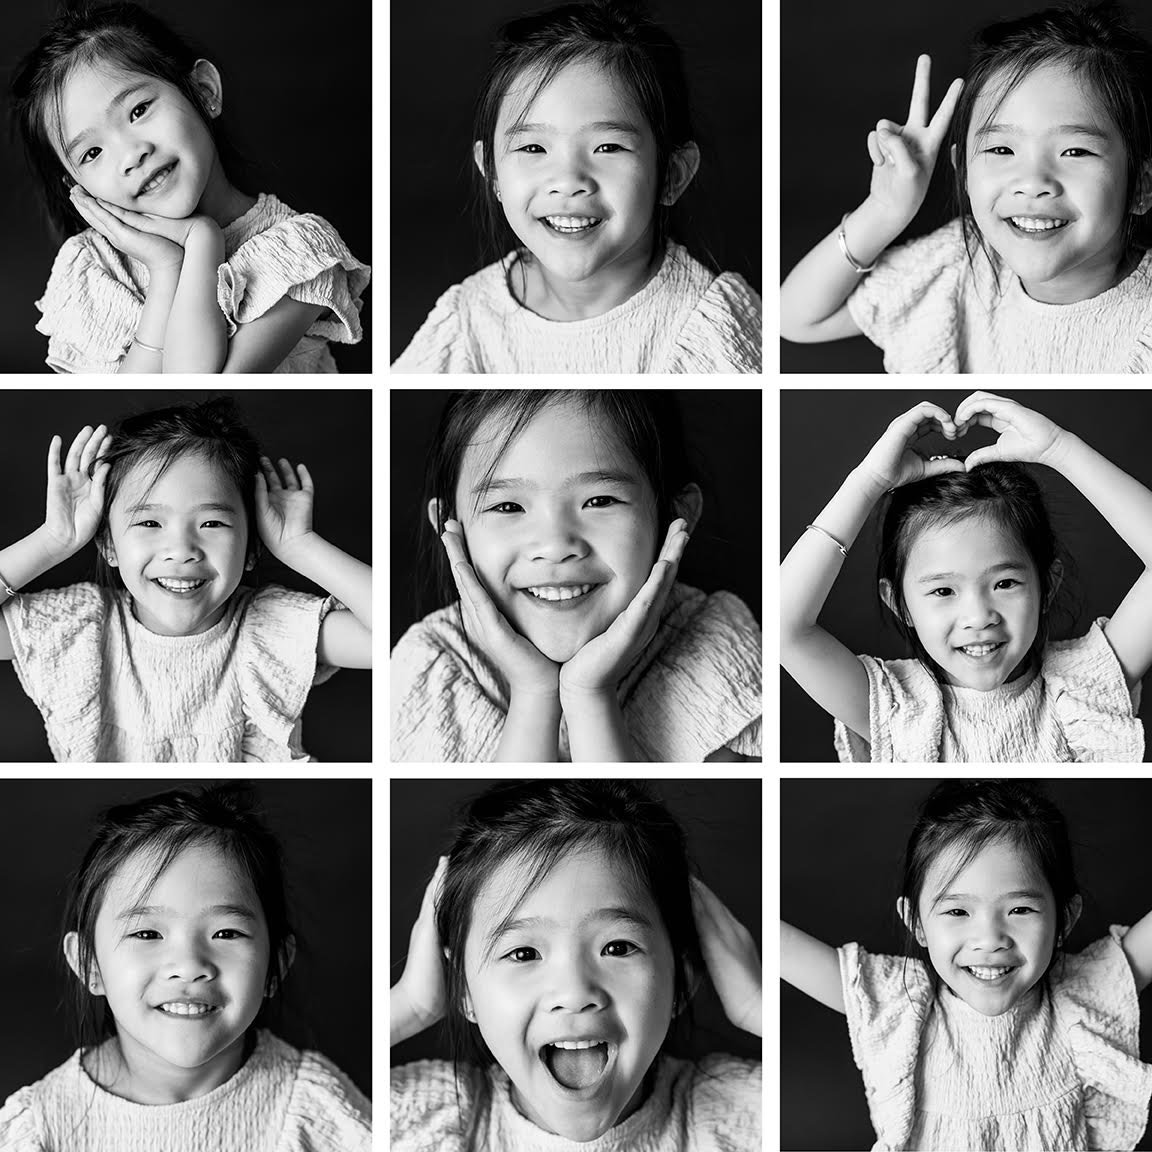 Girl's Black & White Portrait photo grid by Paper bunny studios, Edmonton